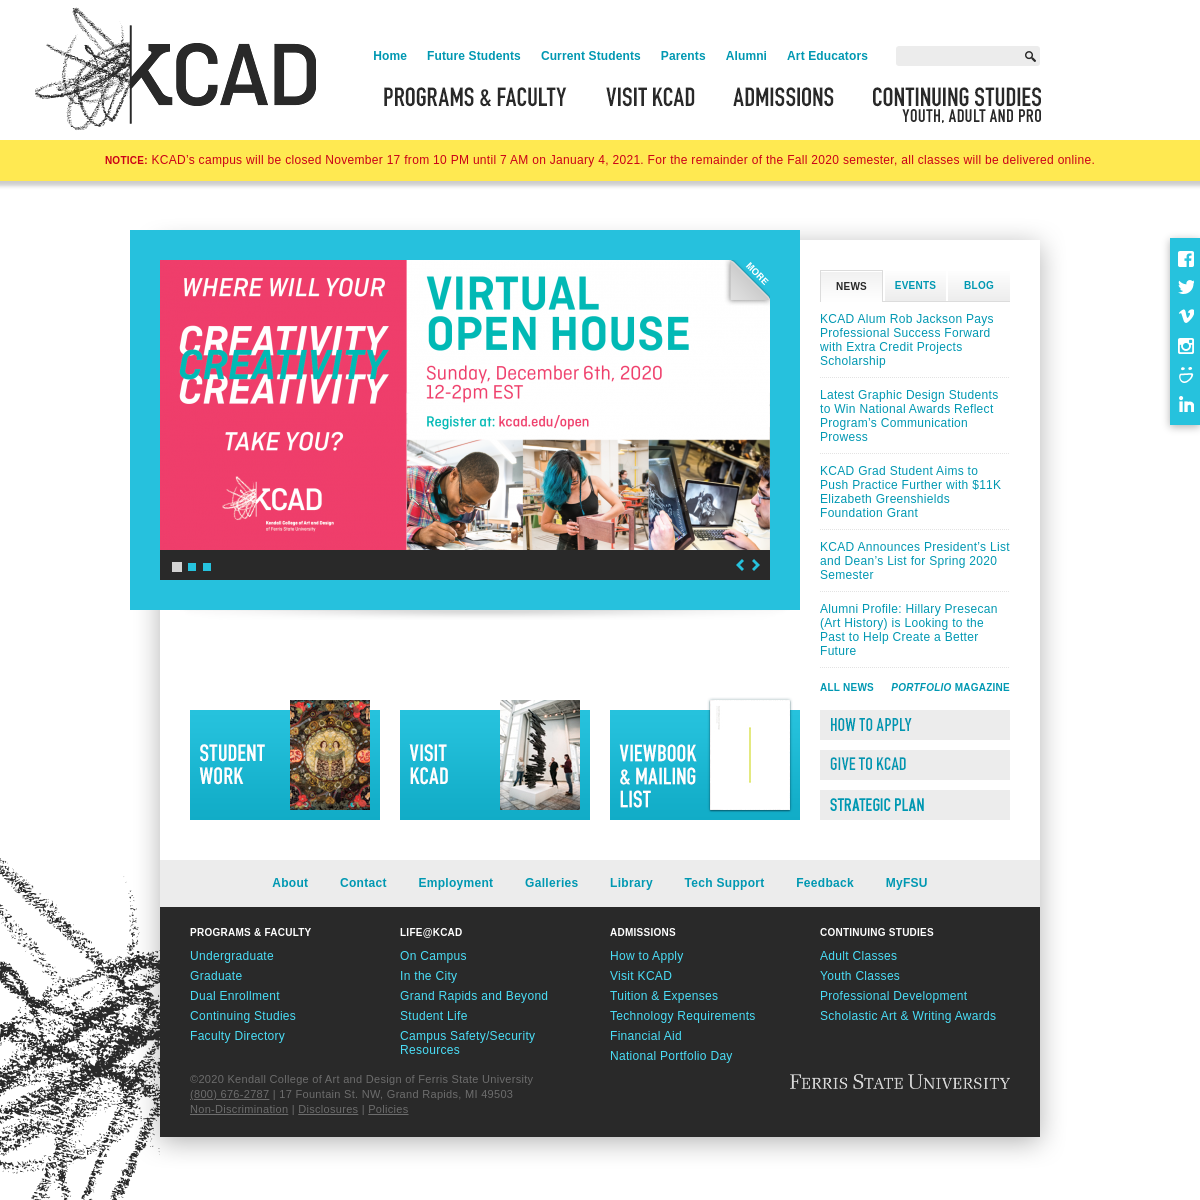 A complete backup of kcad.edu